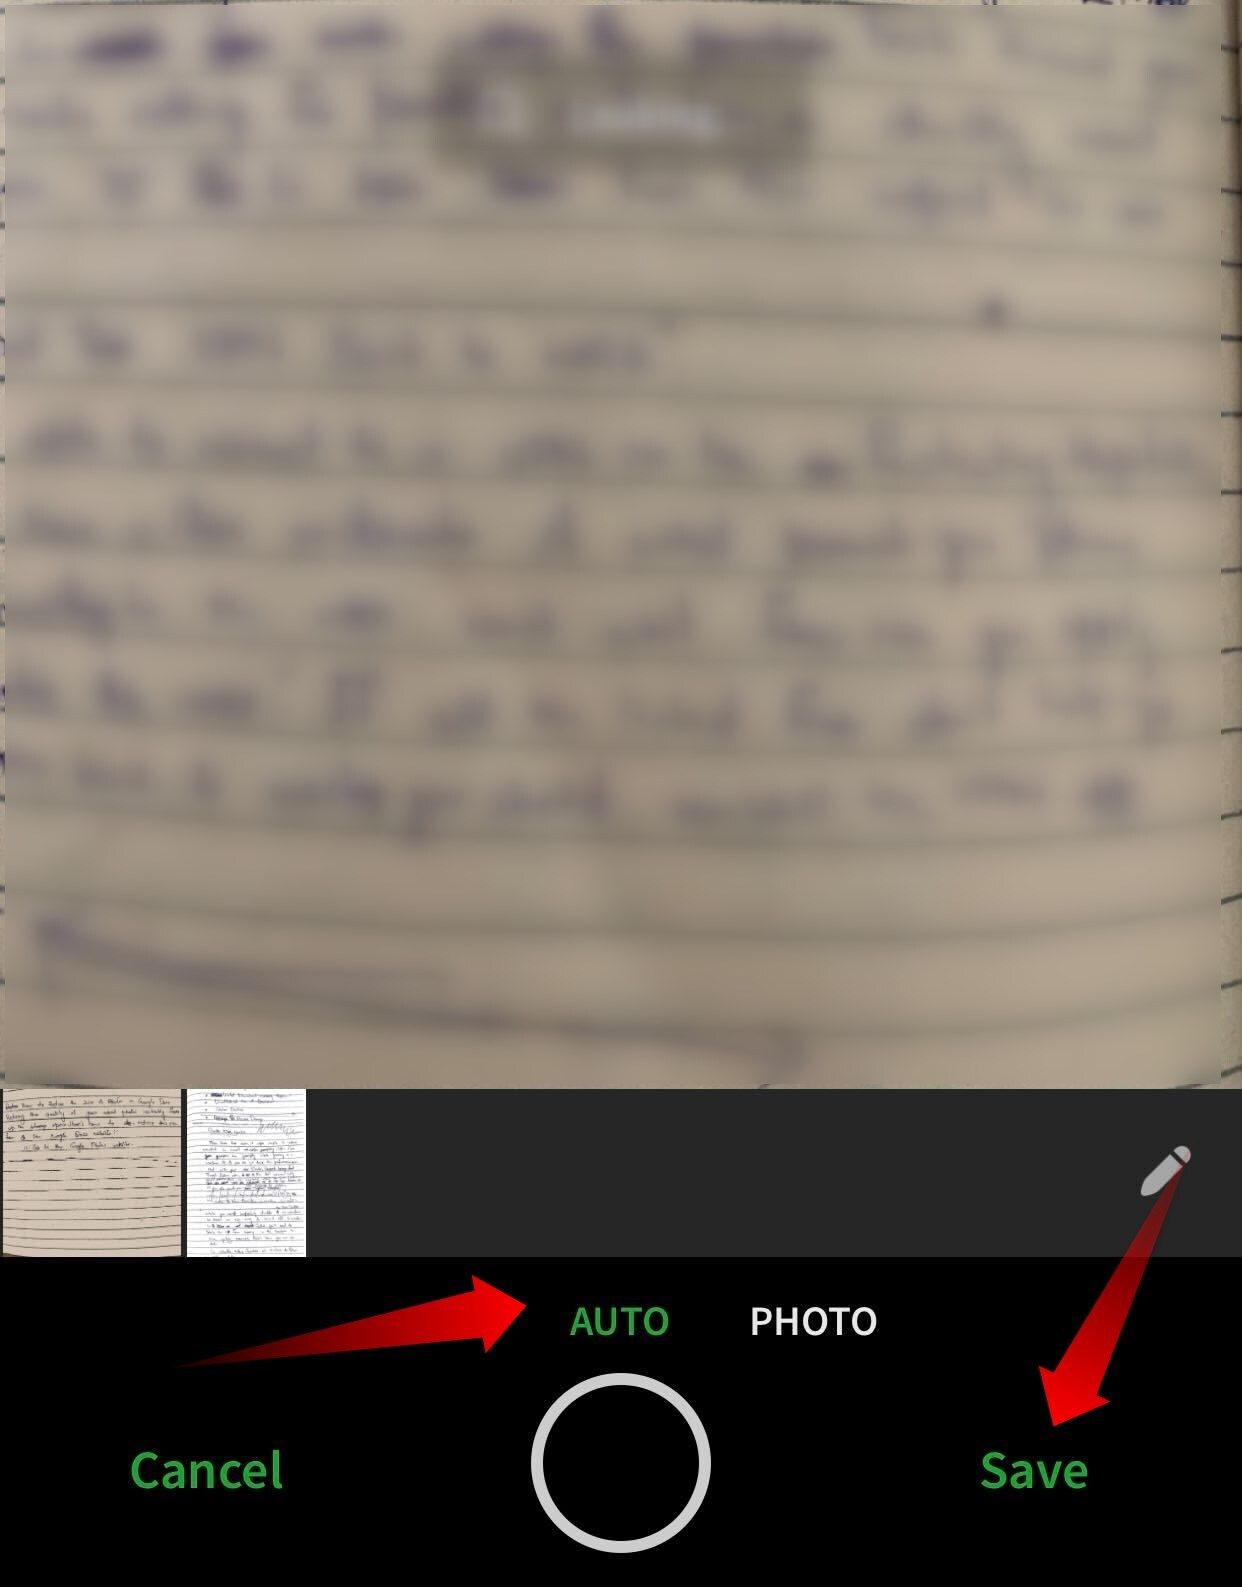 Scanning handwritten notes in Evernote.